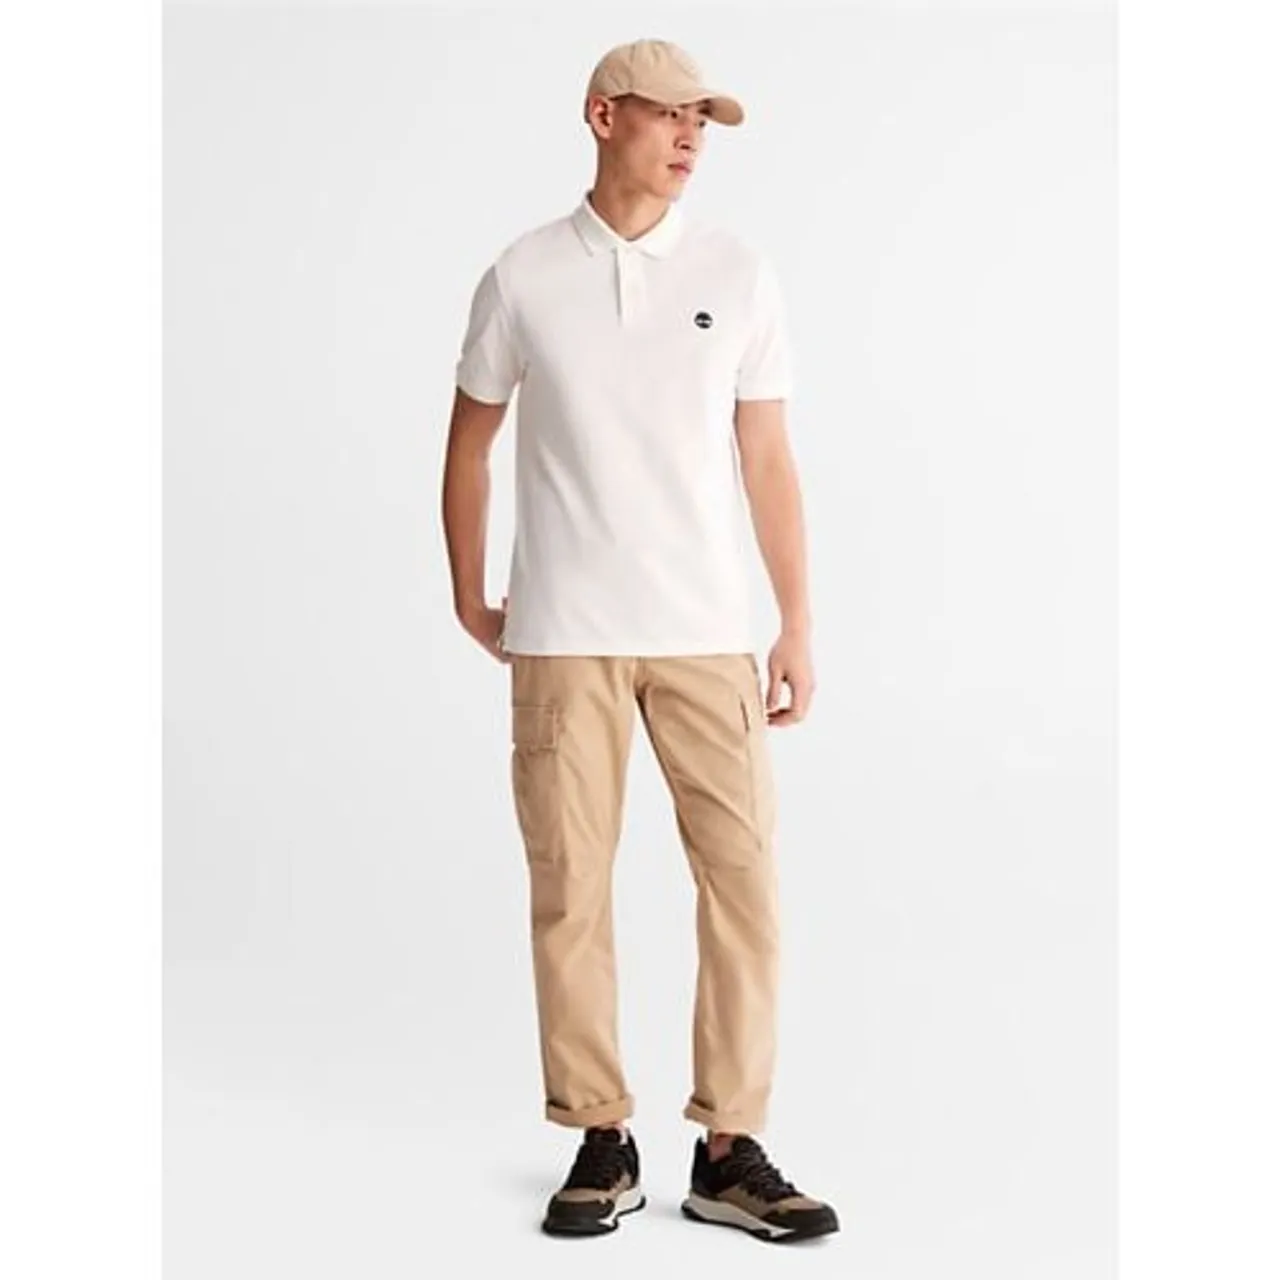 Timberland Mens White Pique Short Sleeve Polo Shirt